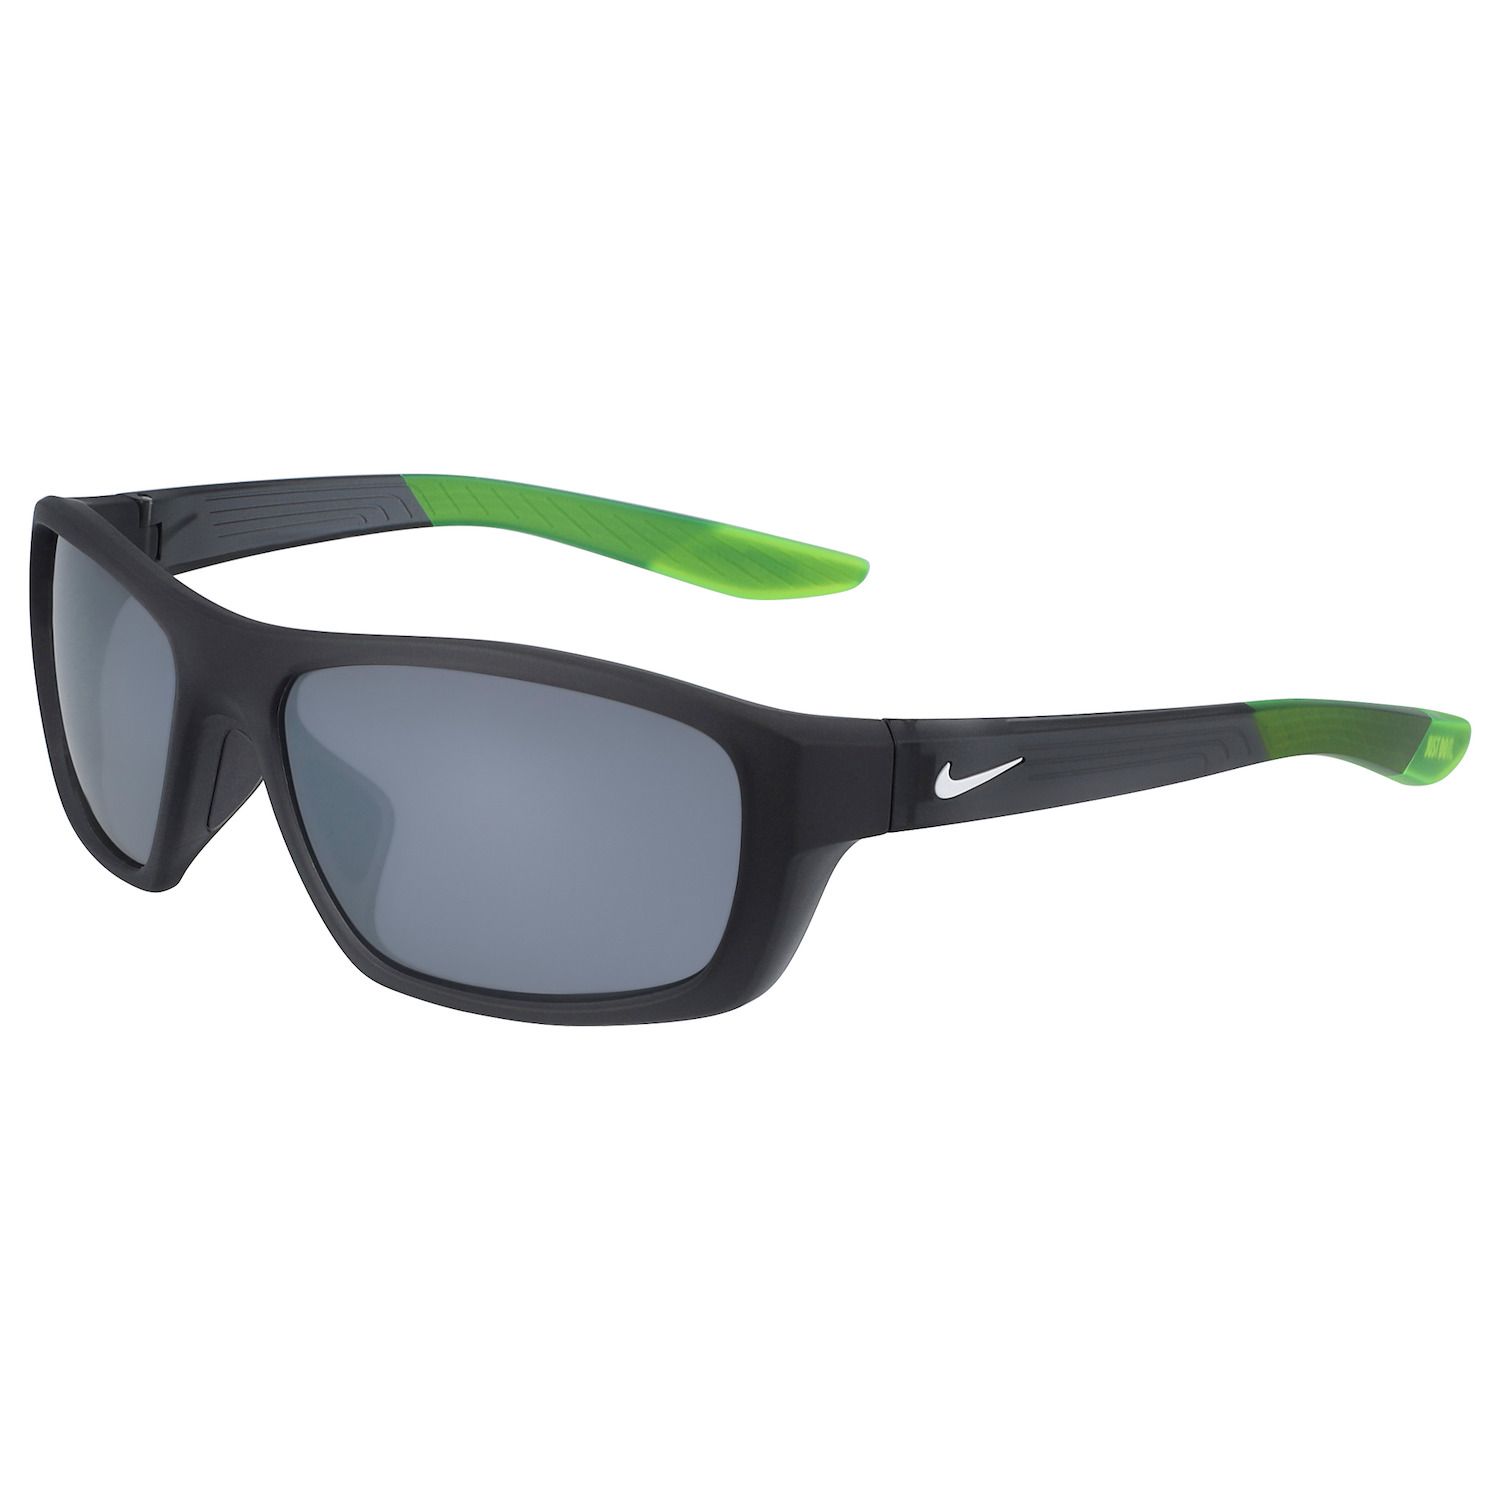 Nike Sunglasses \u0026 Eyewear - Accessories 